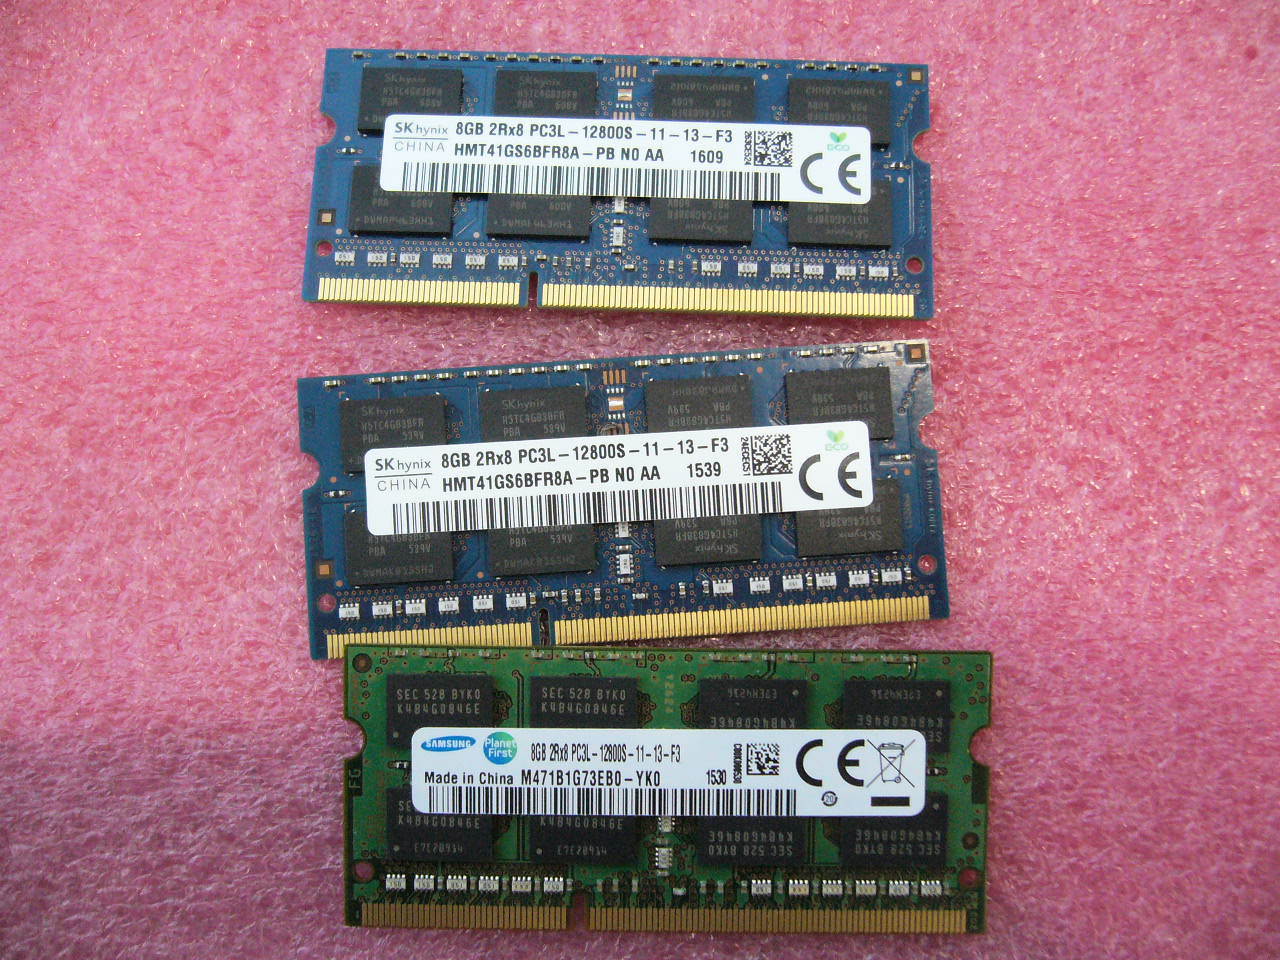 QTY 1x 8GB DDR3 2Rx8 PC3L-12800S SO-DIMM memory Samsung Sk Hynix for laptop